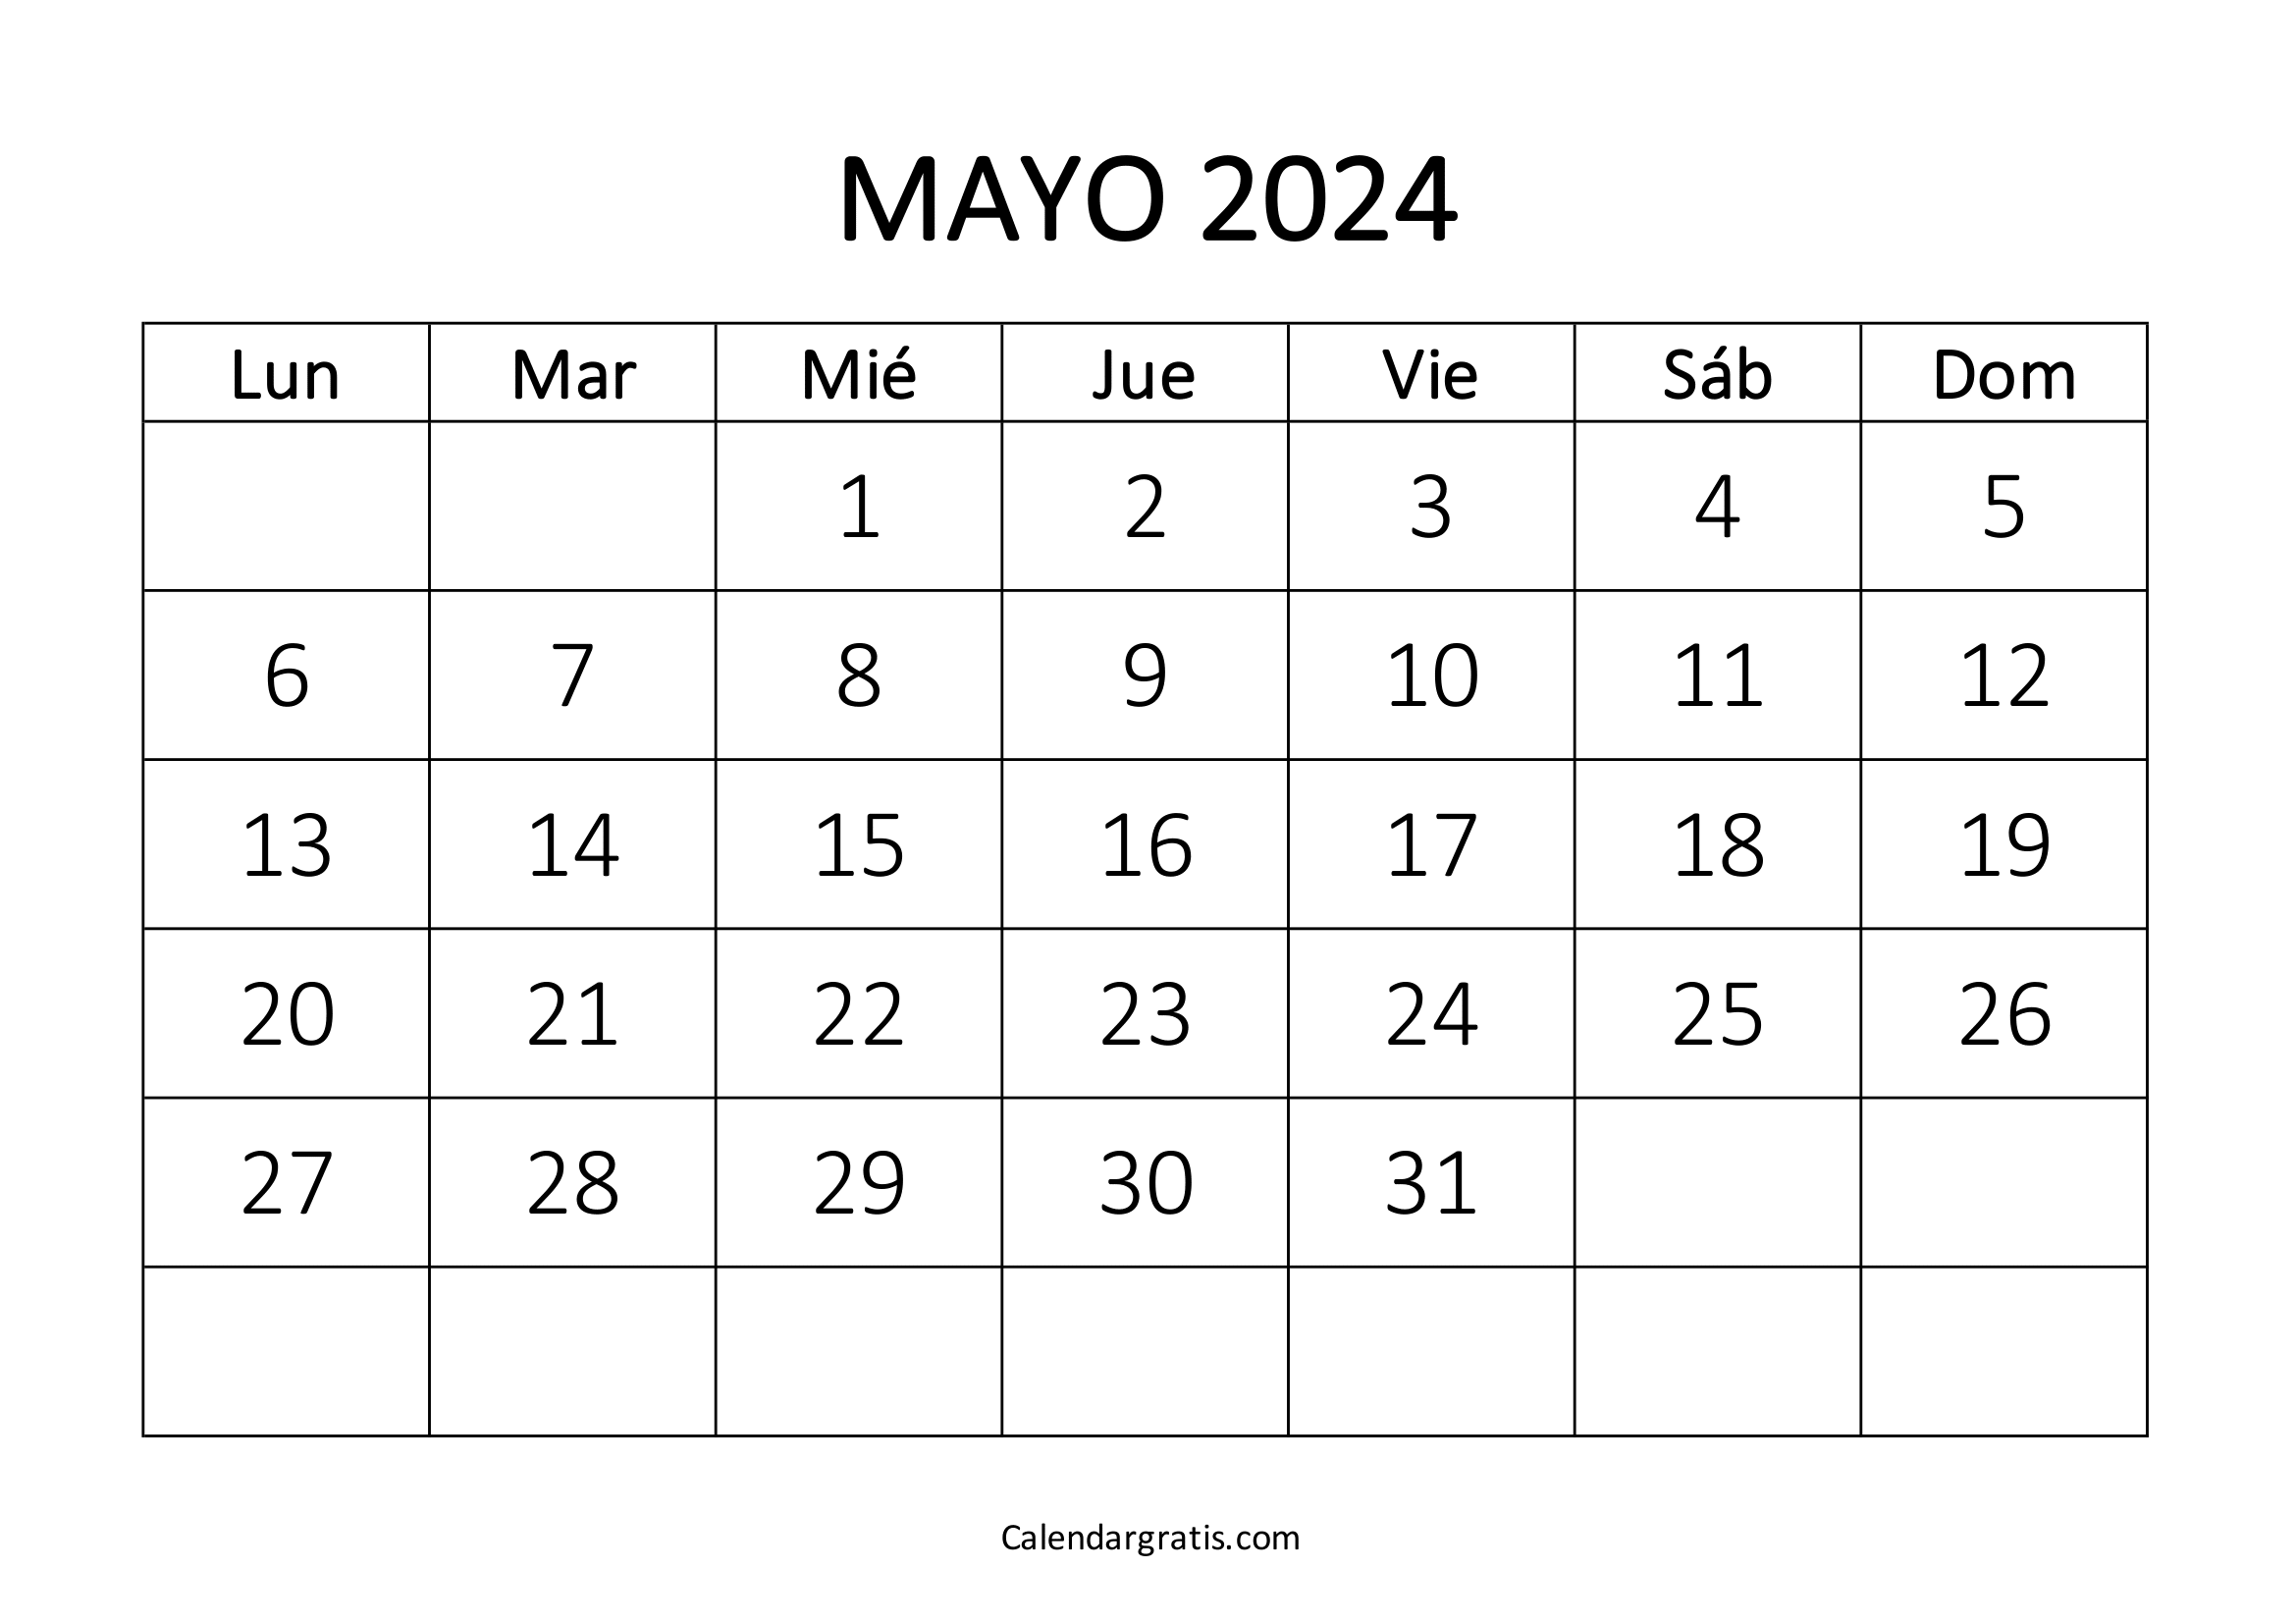 Calendario mayo 2024 para imprimir gratis